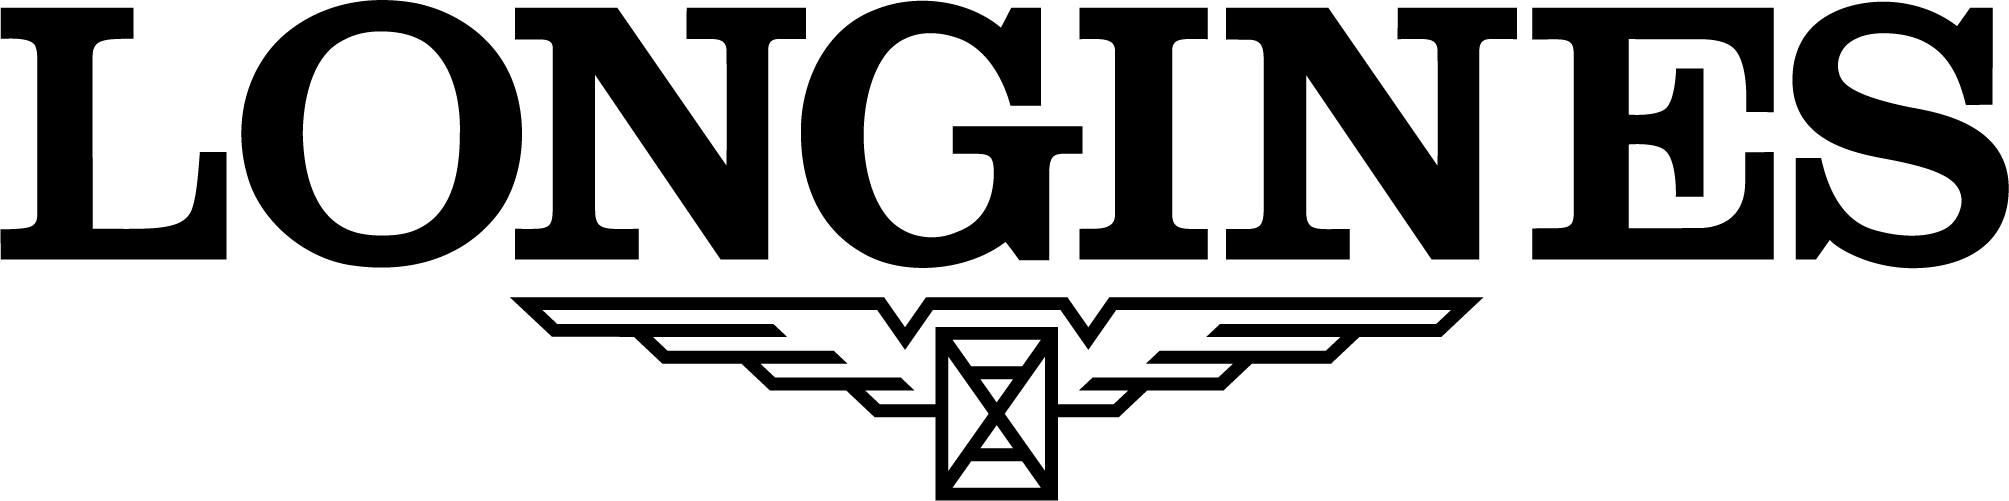 Logo Longines black RGB